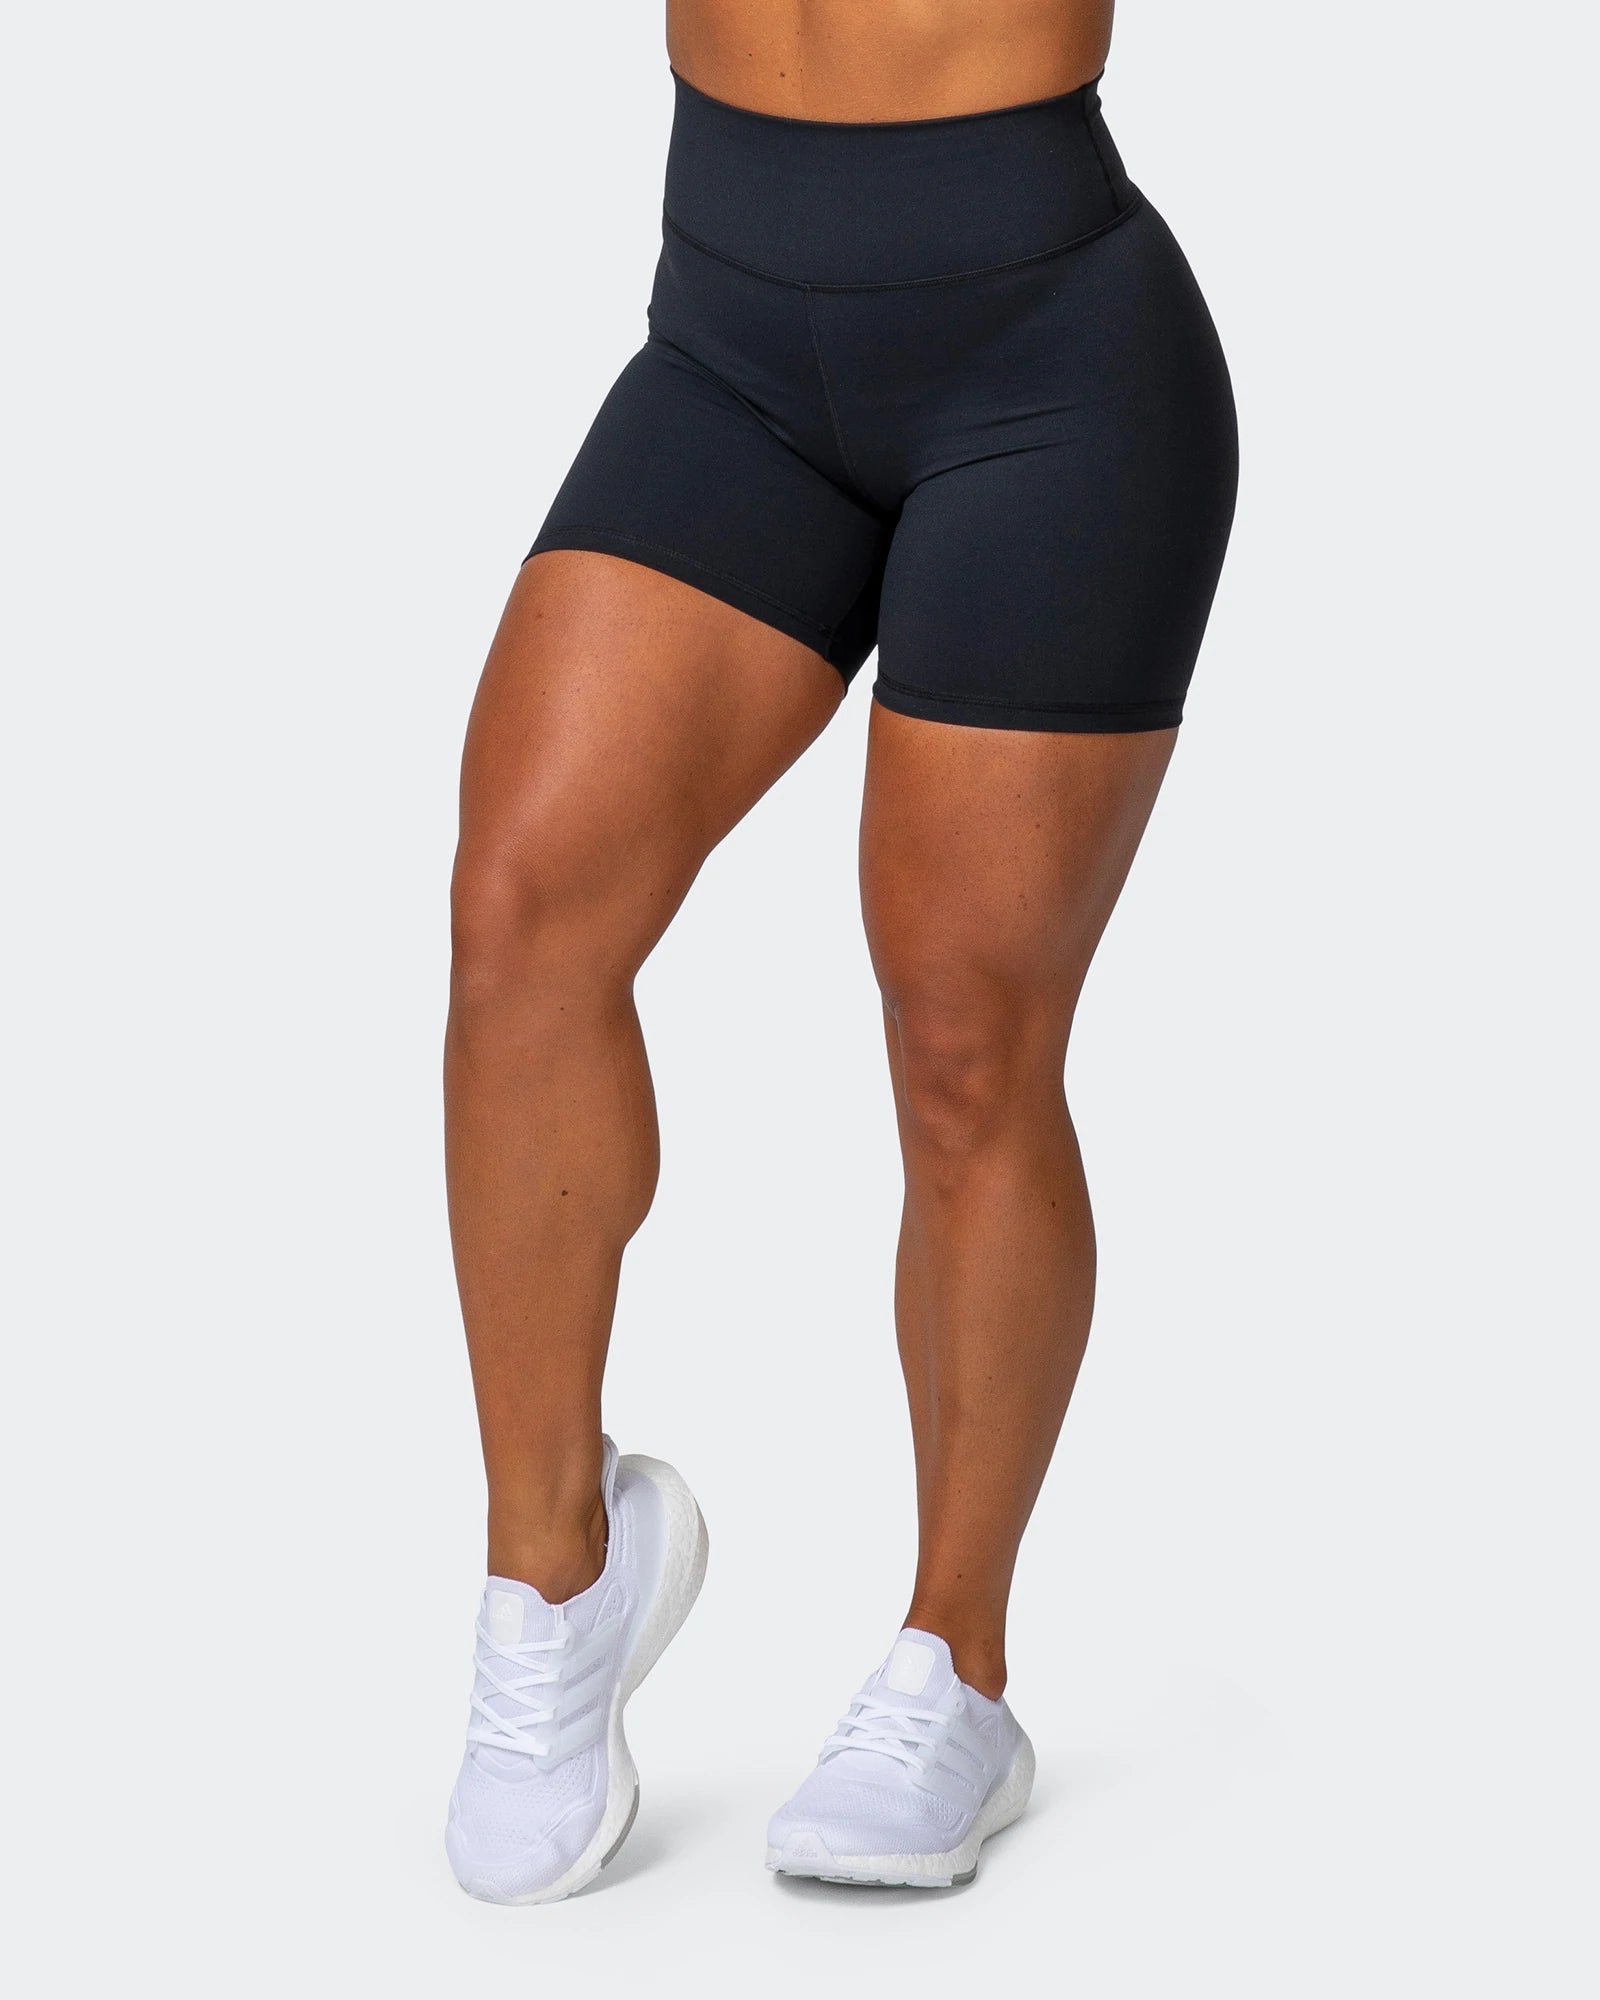 musclenation Shorts PRIZE FIGHTER BIKE SHORTS Black w/ White & Aqua